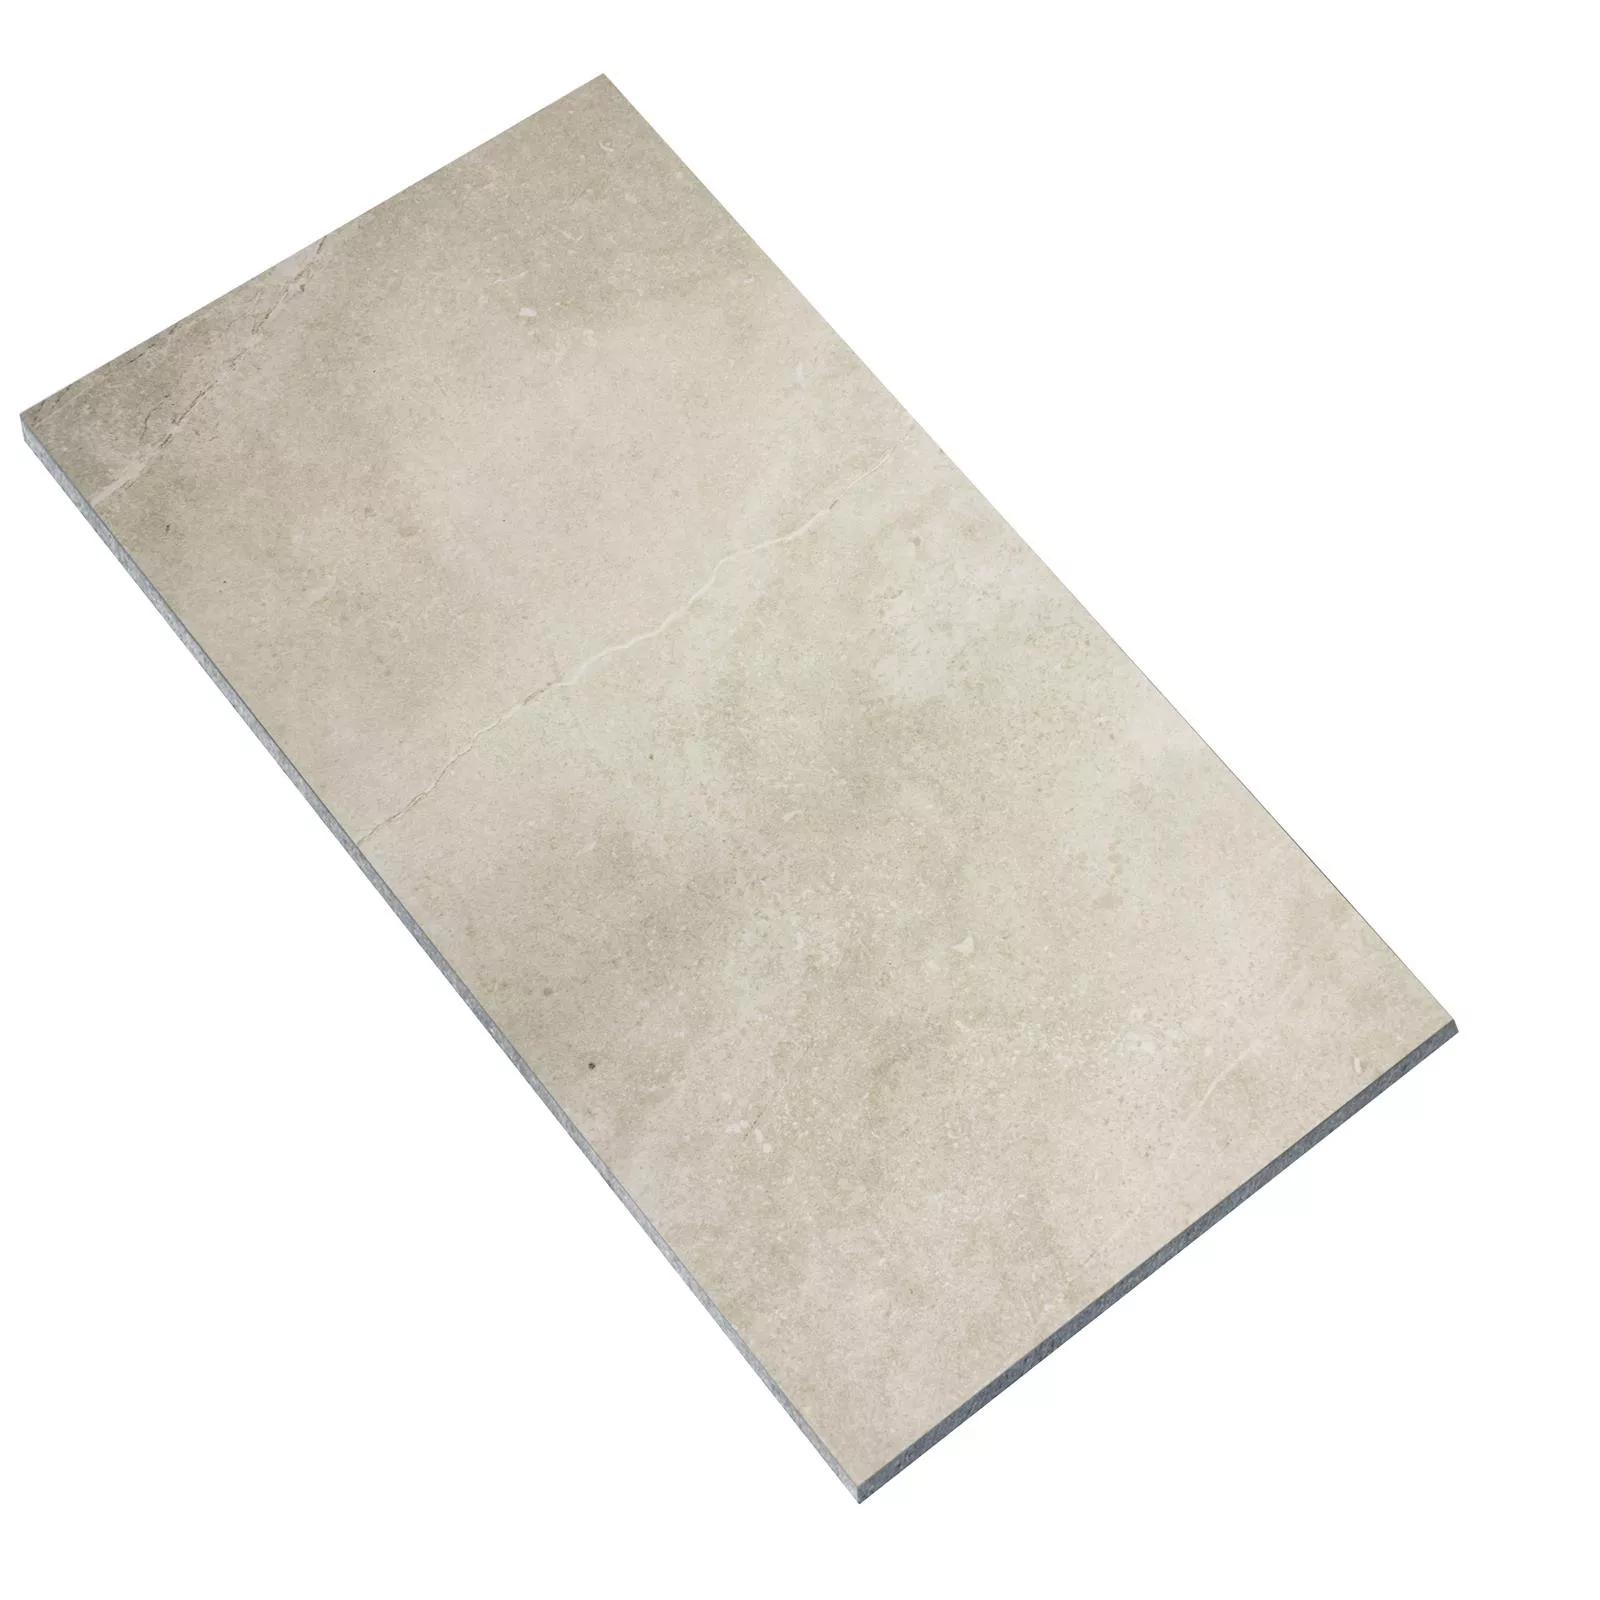 Sample Floor Tiles Stone Optic Newton Ivory 30x60cm